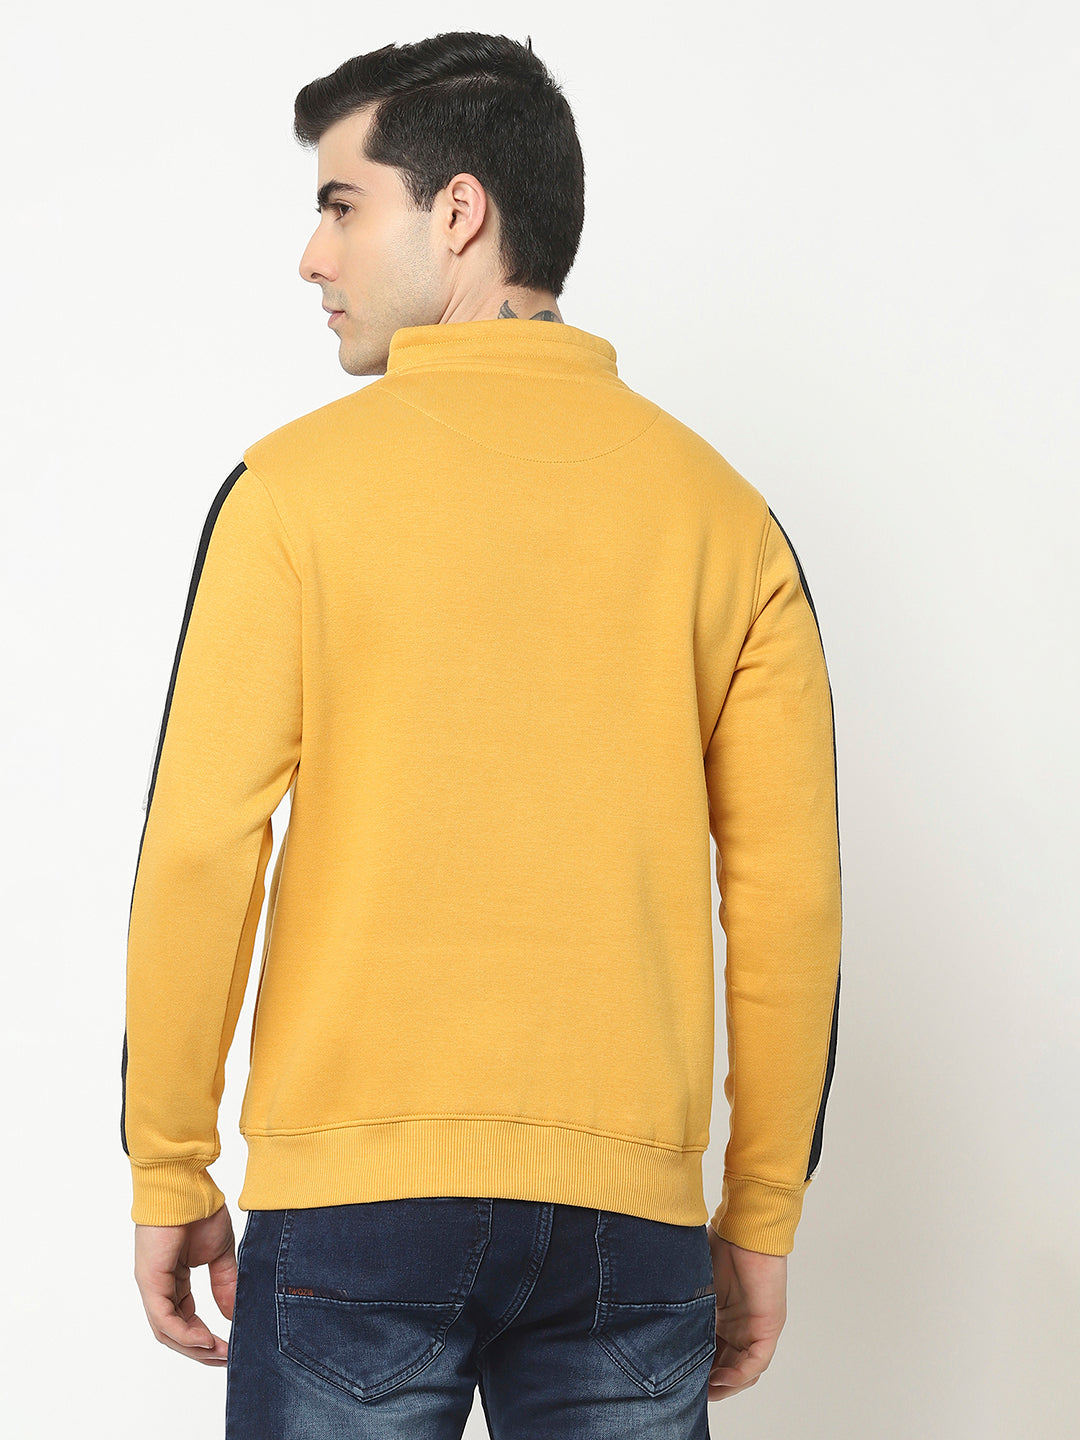  Mustard Sweatshirt with Typography Print